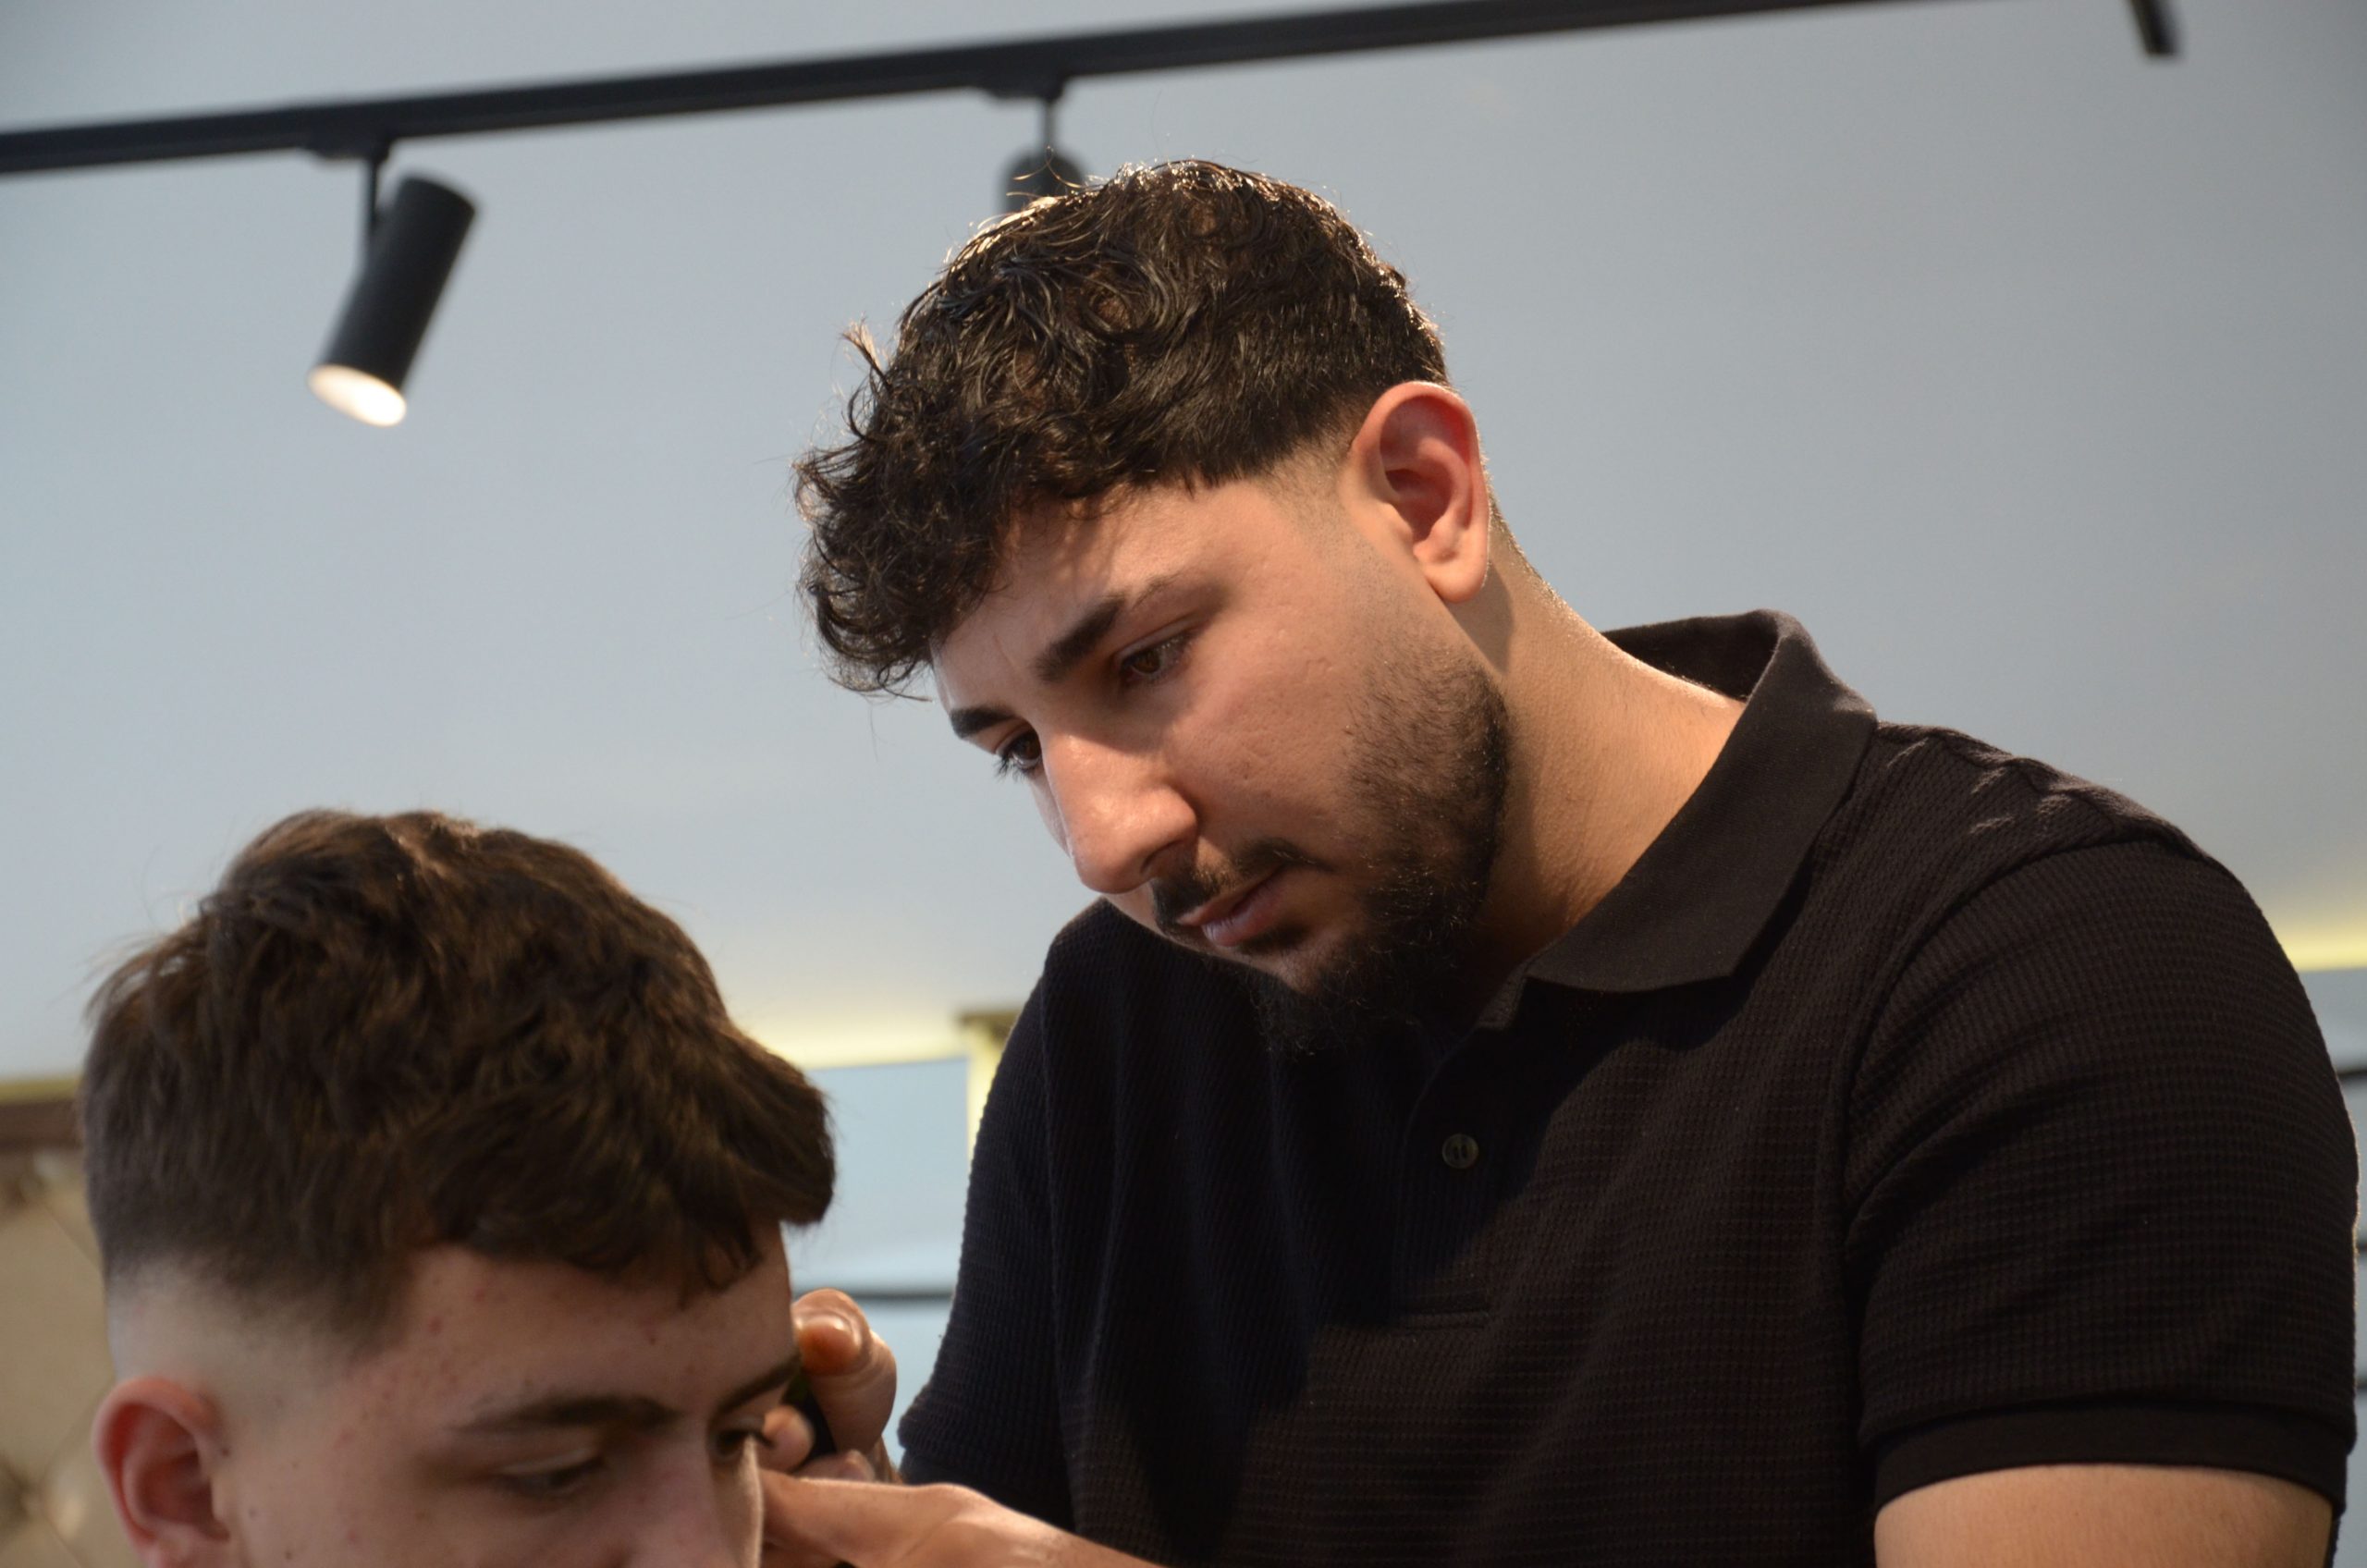 Ahmad Kurdo beim Haareschneiden